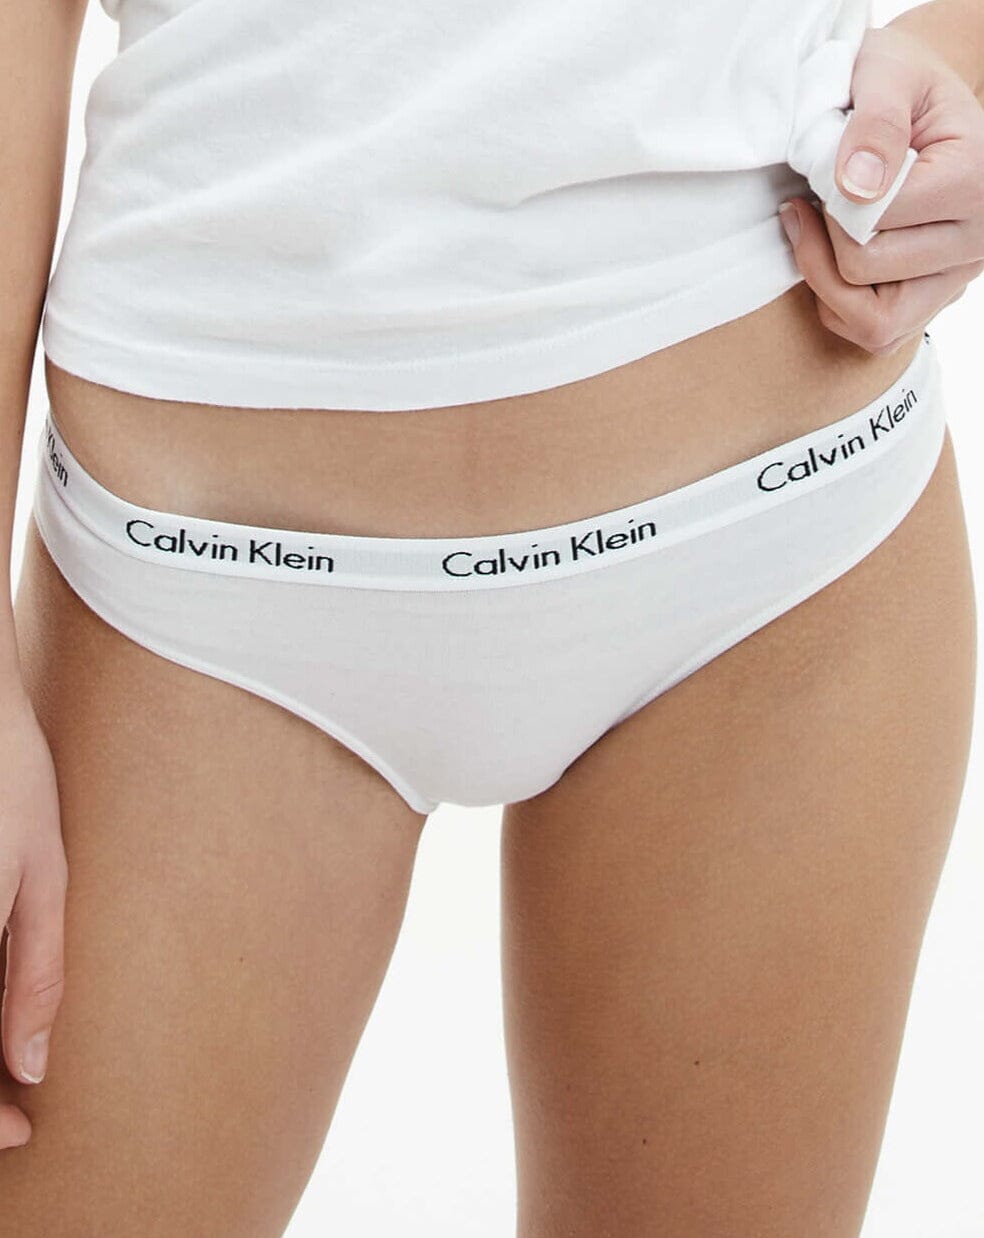 Calvin Klein Carousel 3 Pack Bikini Brief - Black/Grey Heather